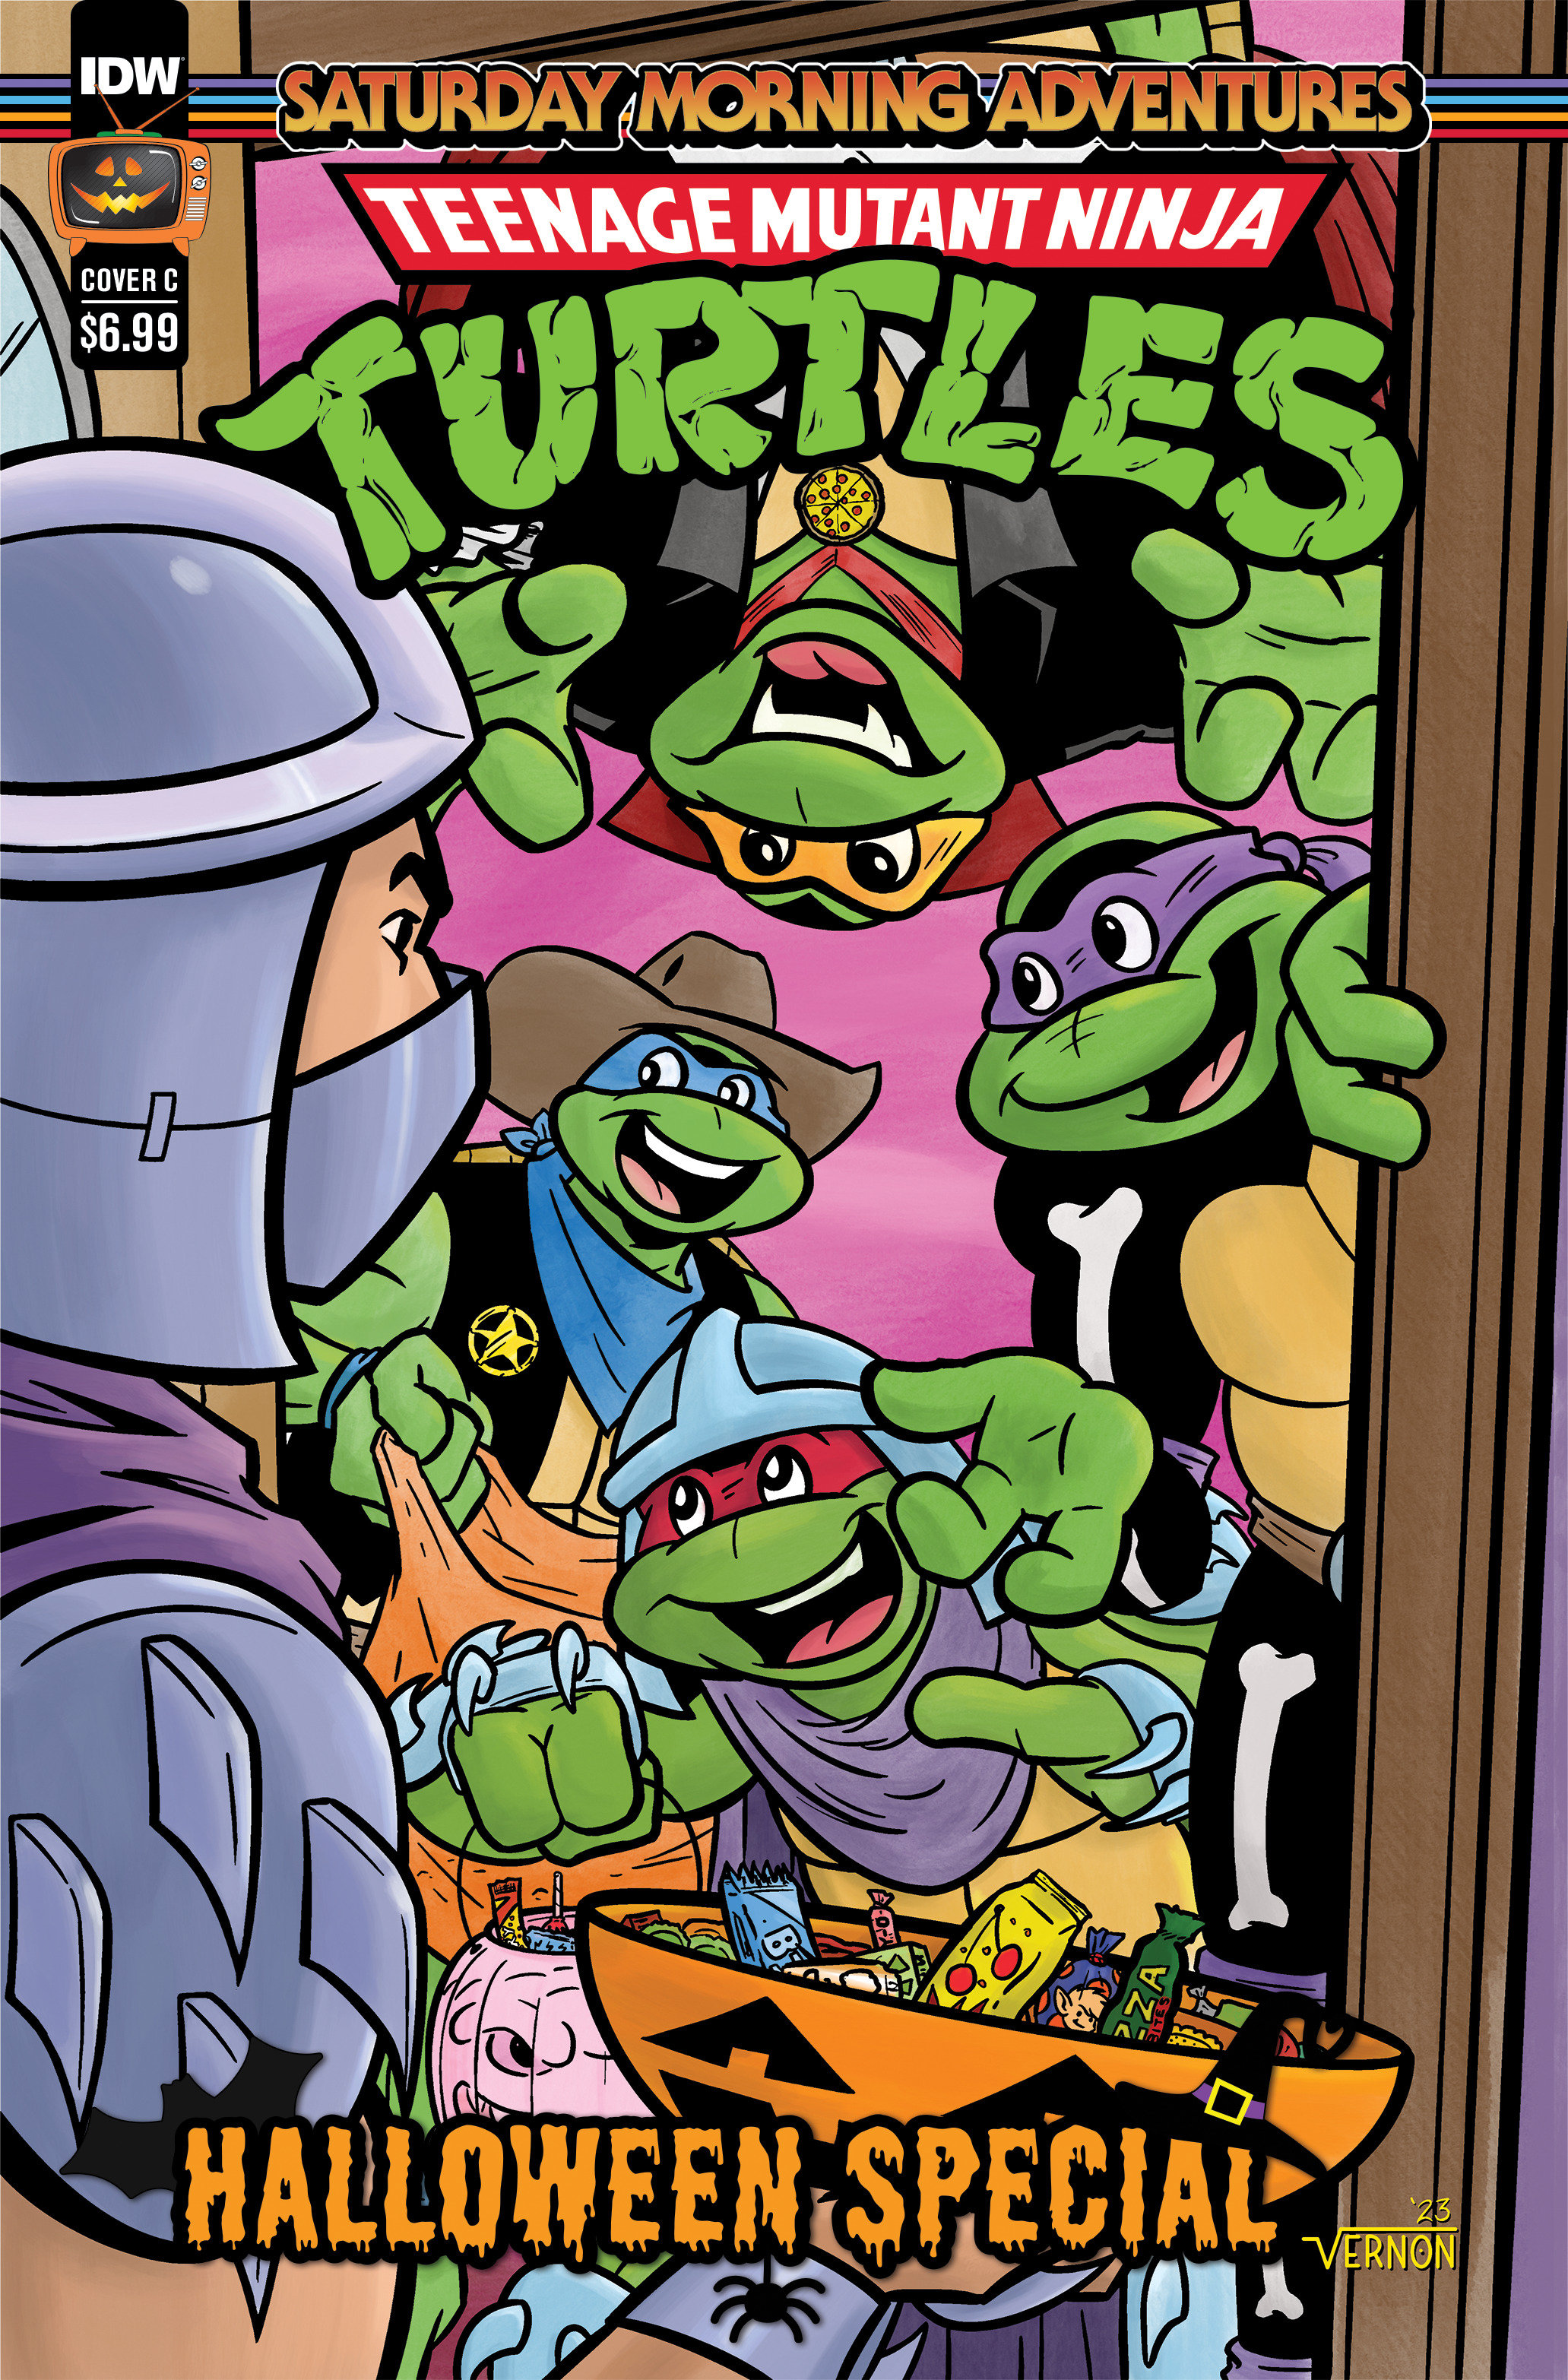 Teenage Mutant Ninja Turtles Saturday Morning Adventures Halloween Special Cover C Smith